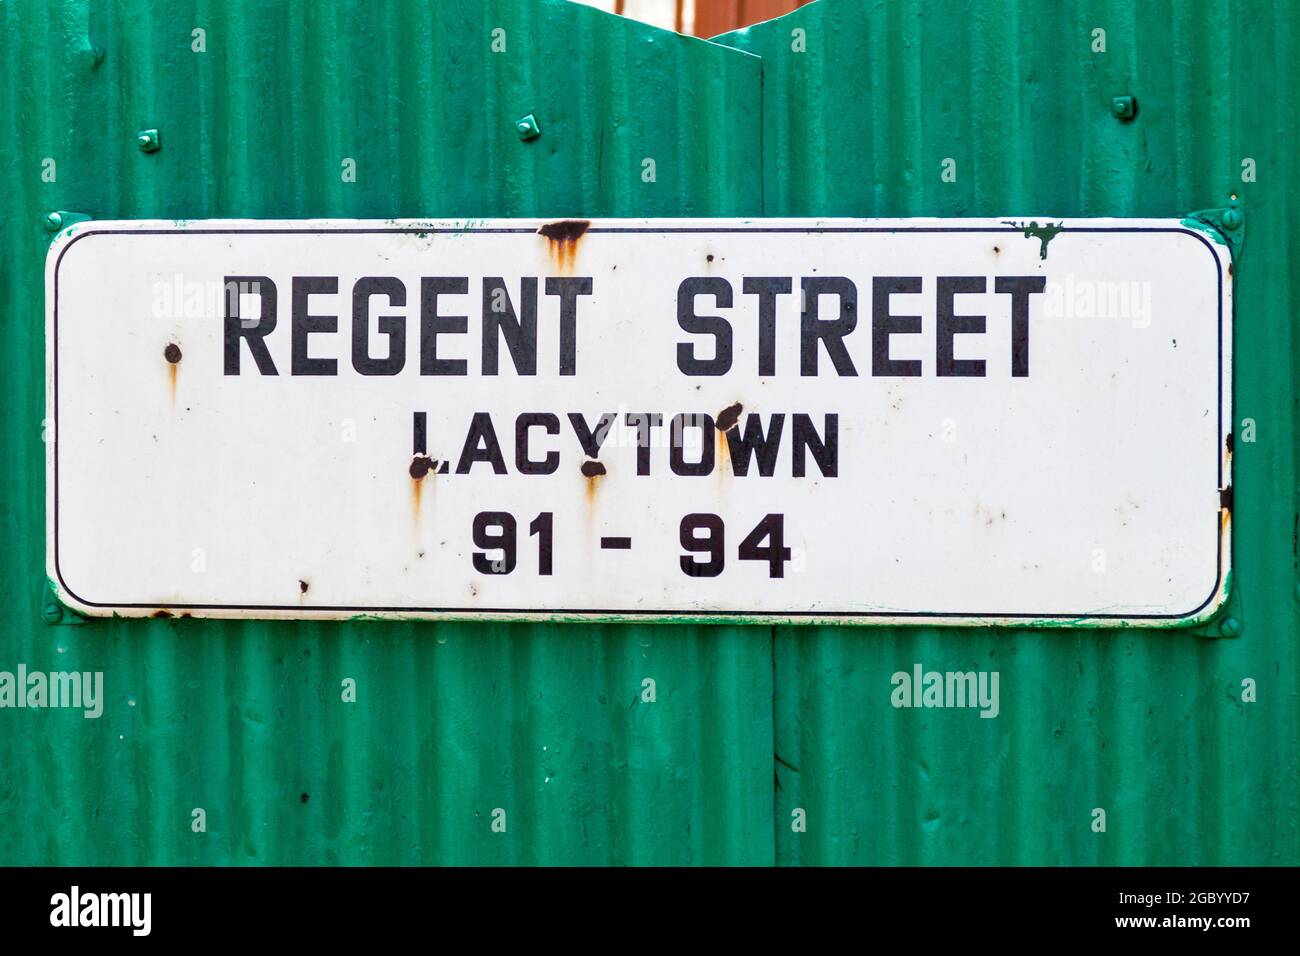 Regent Street name sign in Georgetown, Guayana Stock Photo